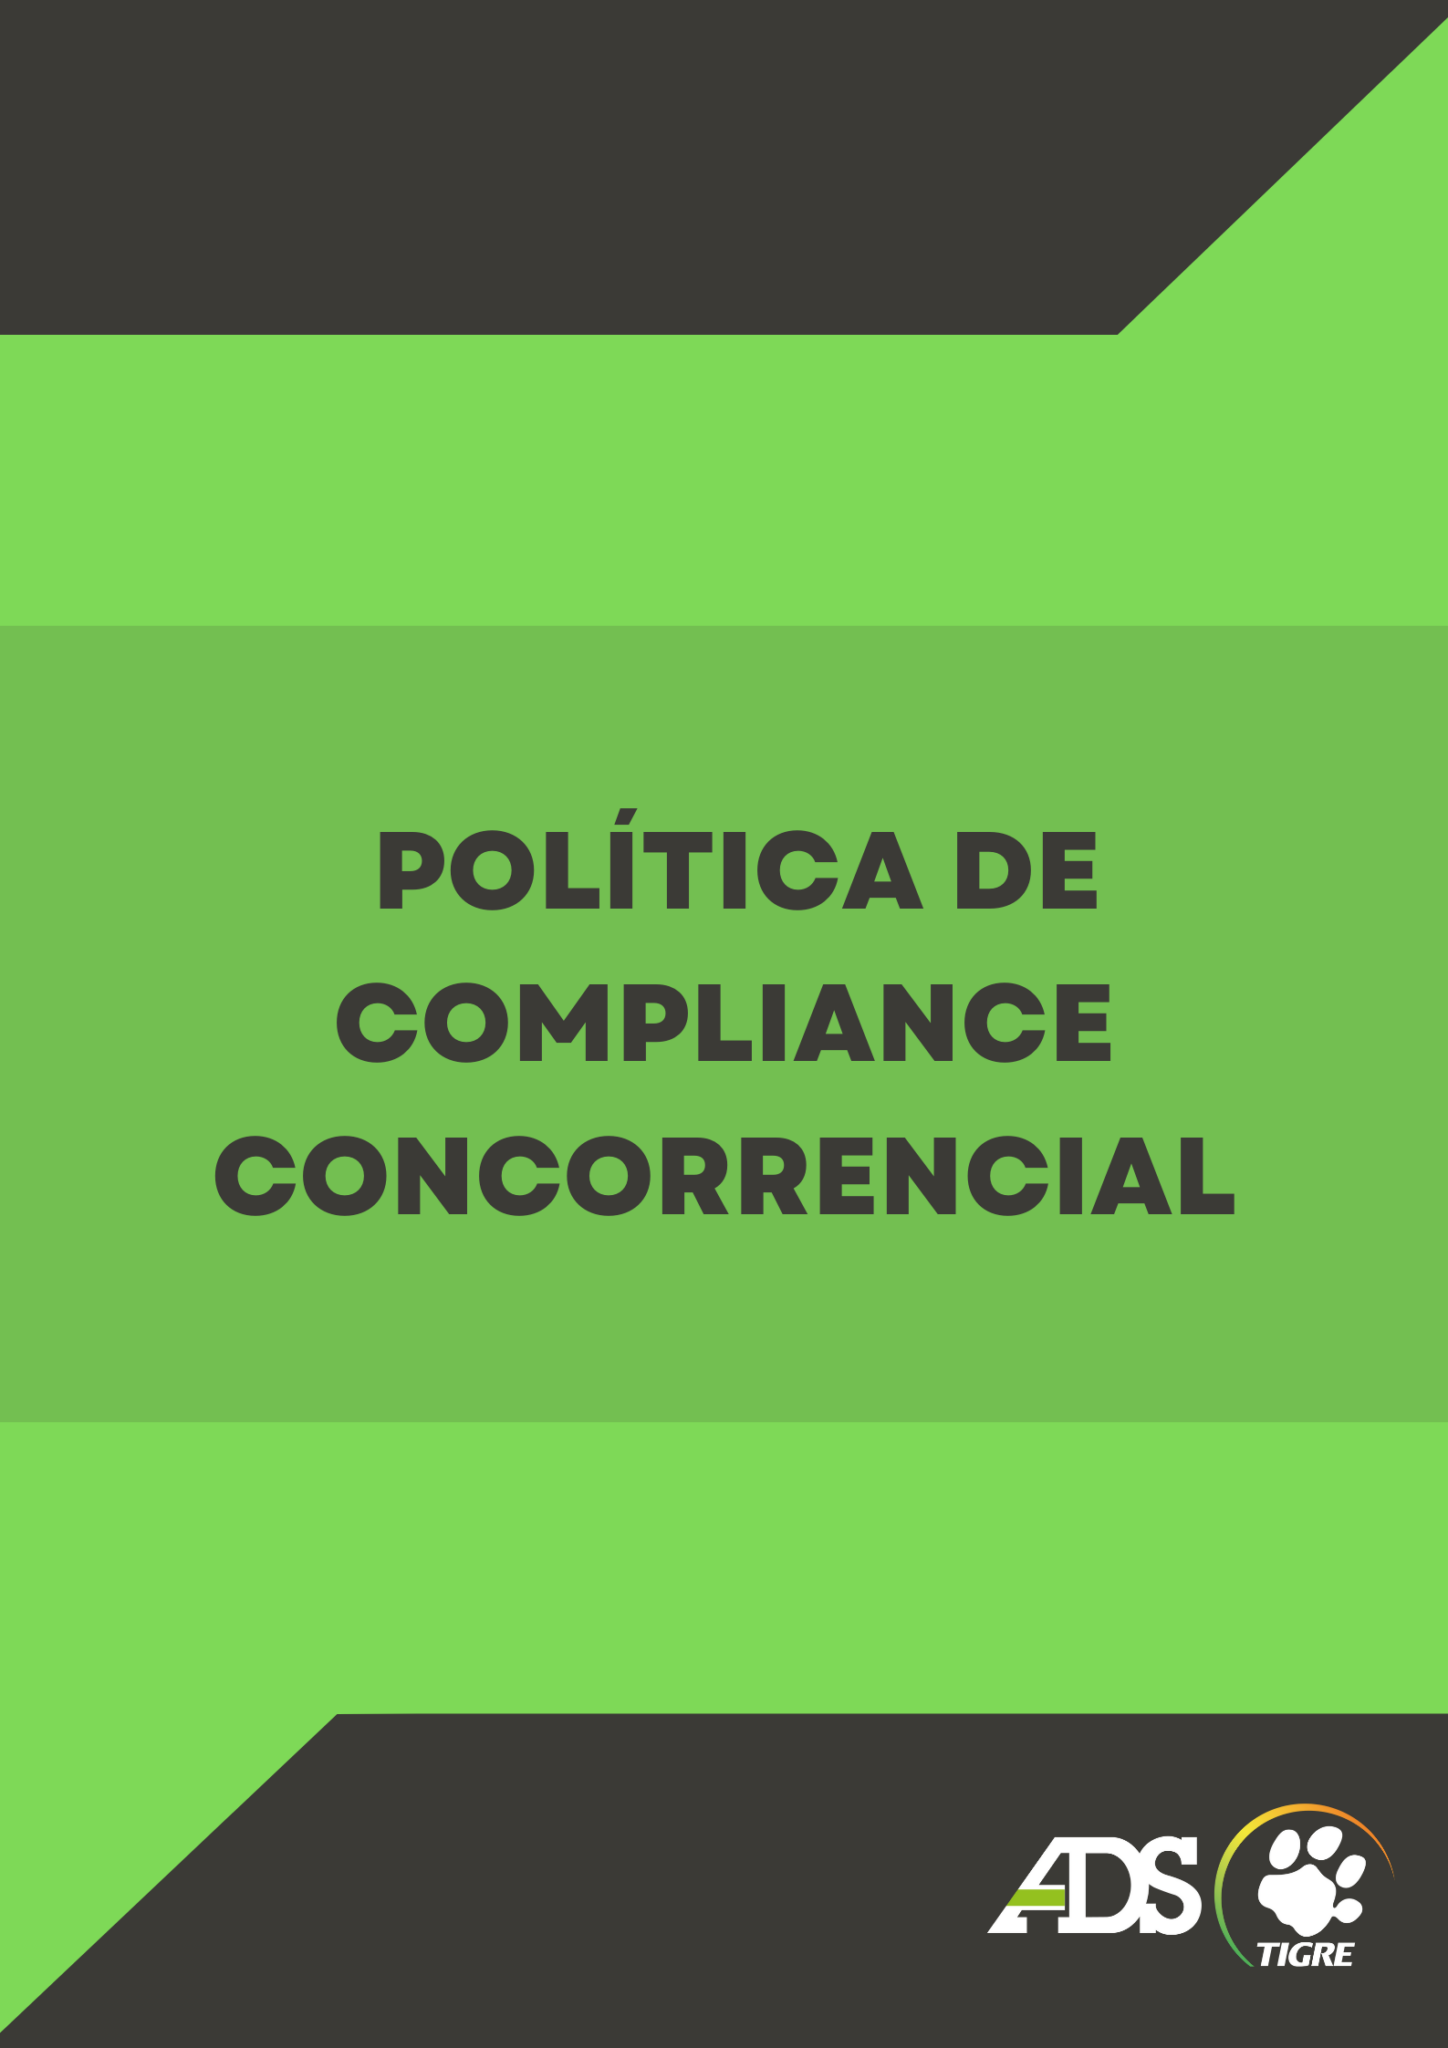 ads-capa_politica_de_compliance_concorrecial-1448x2048